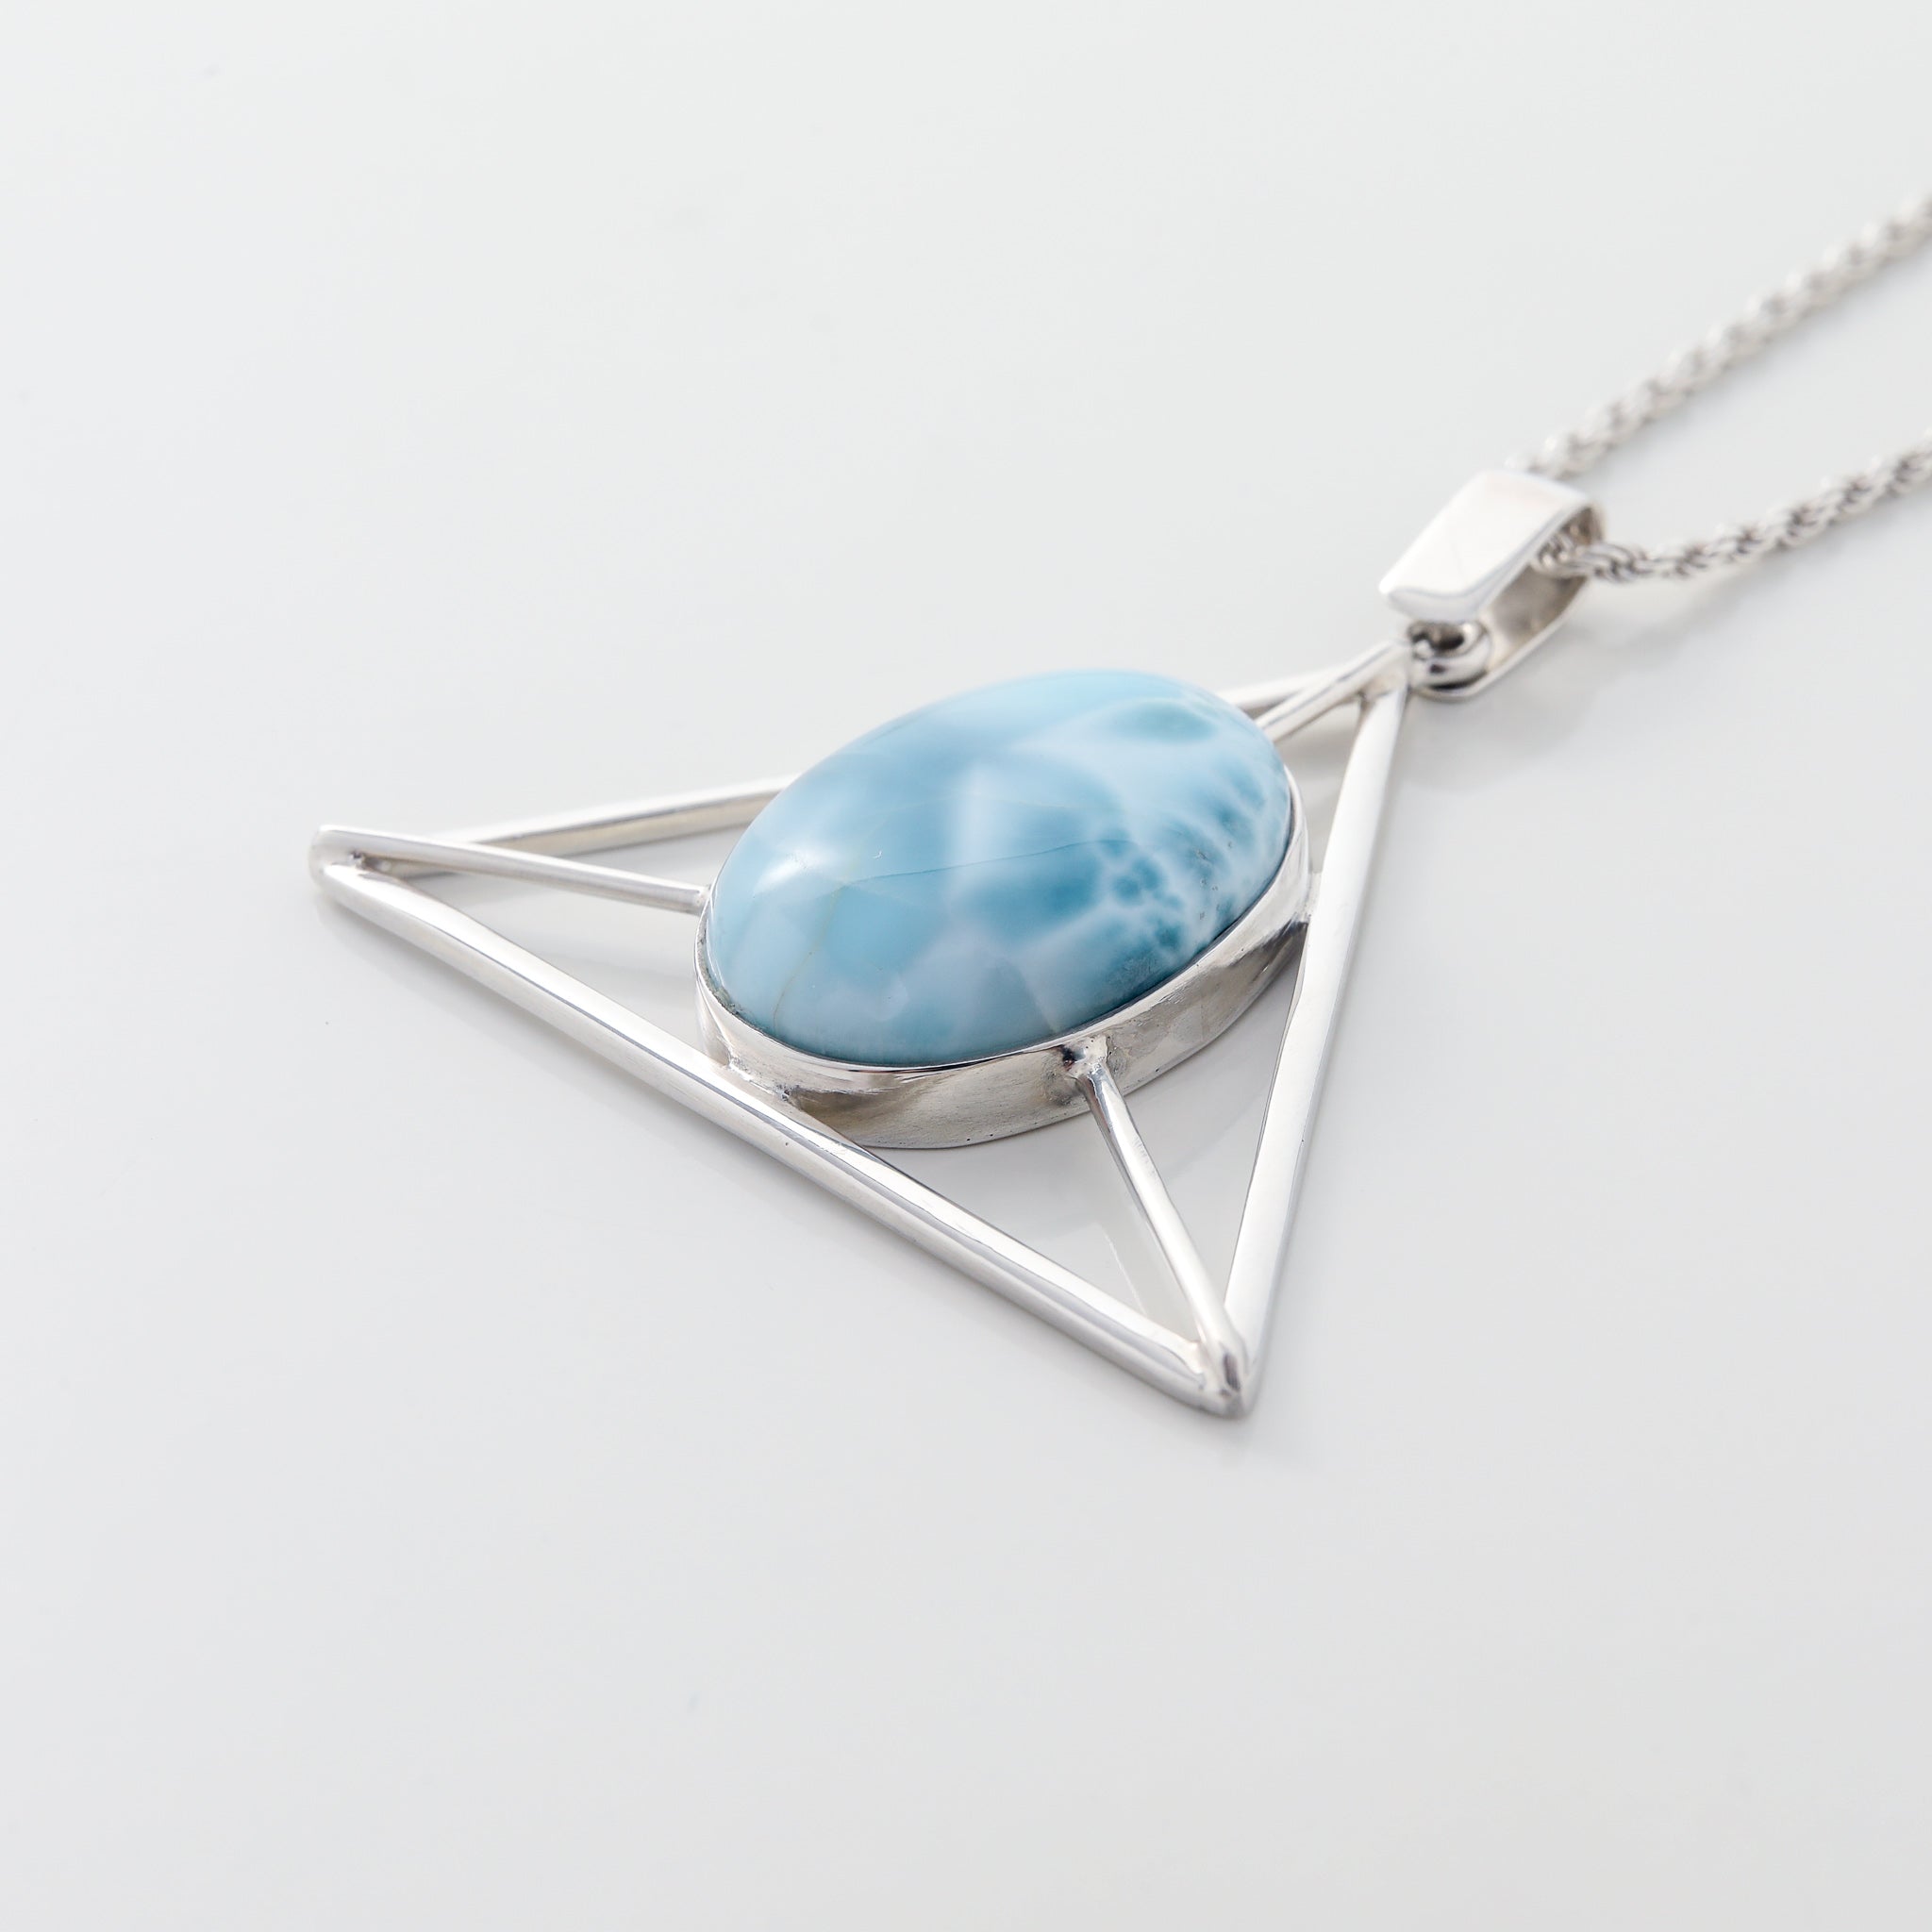 Triangle Shaped Larimar Pendant, Artisanal Jewellery for Women